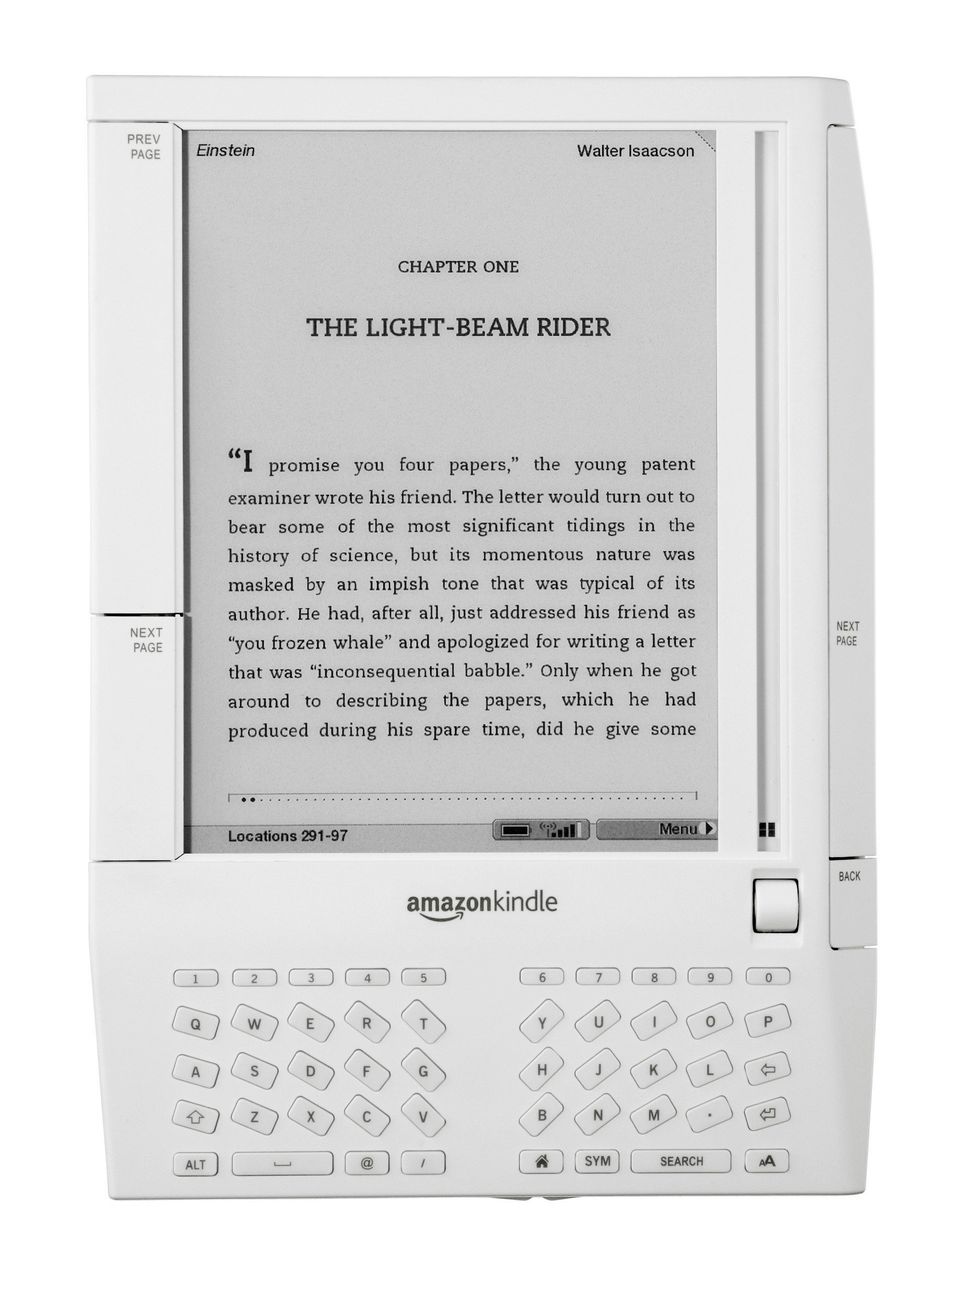 The original Kindle (2007)